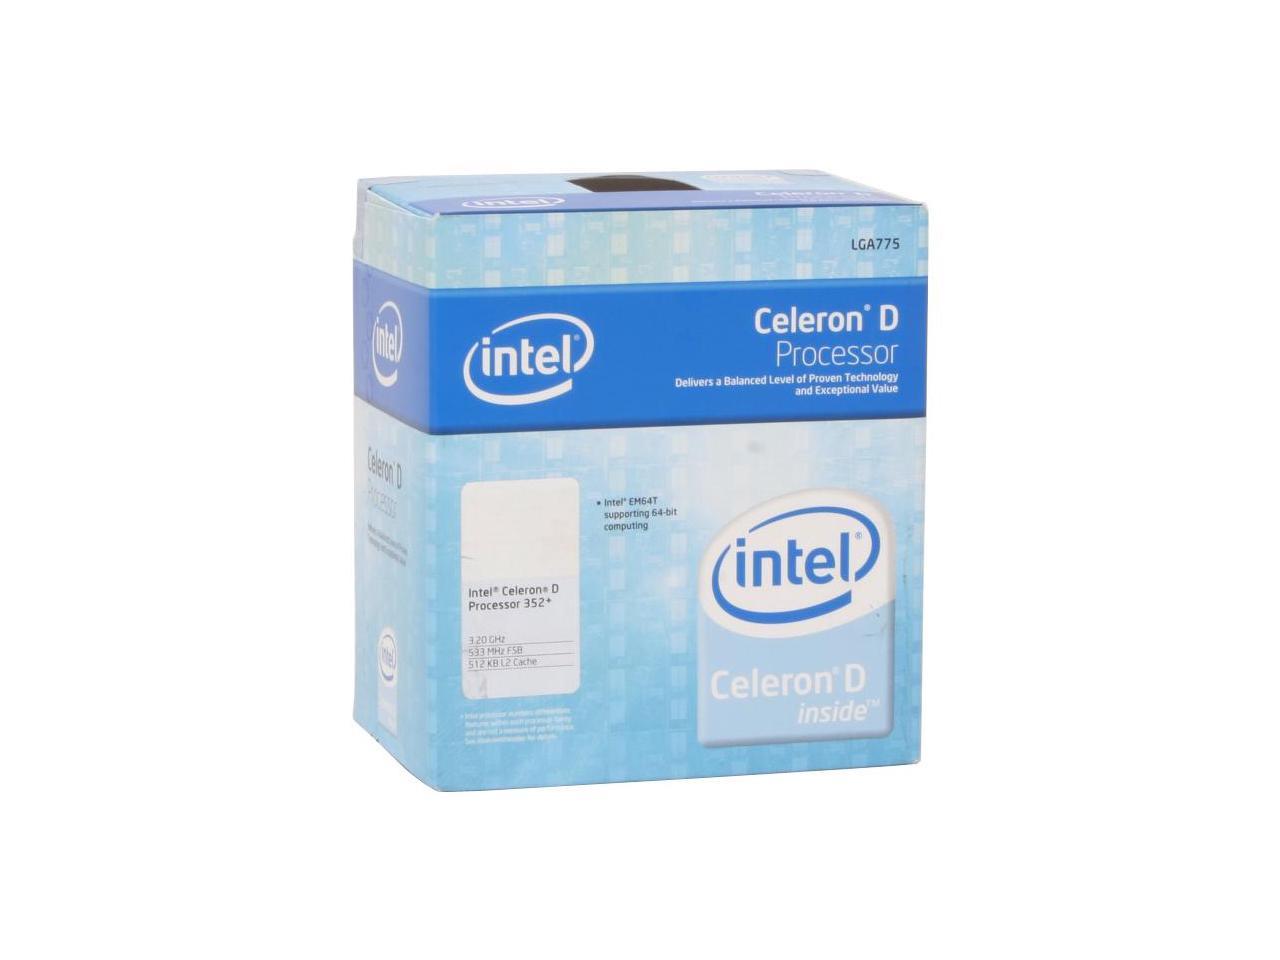 Bezet paneel Open Intel Celeron D 352 - Celeron D Cedar Mill Single-Core 3.2 GHz LGA 775 65W  Processor - BX80552352 - Newegg.com